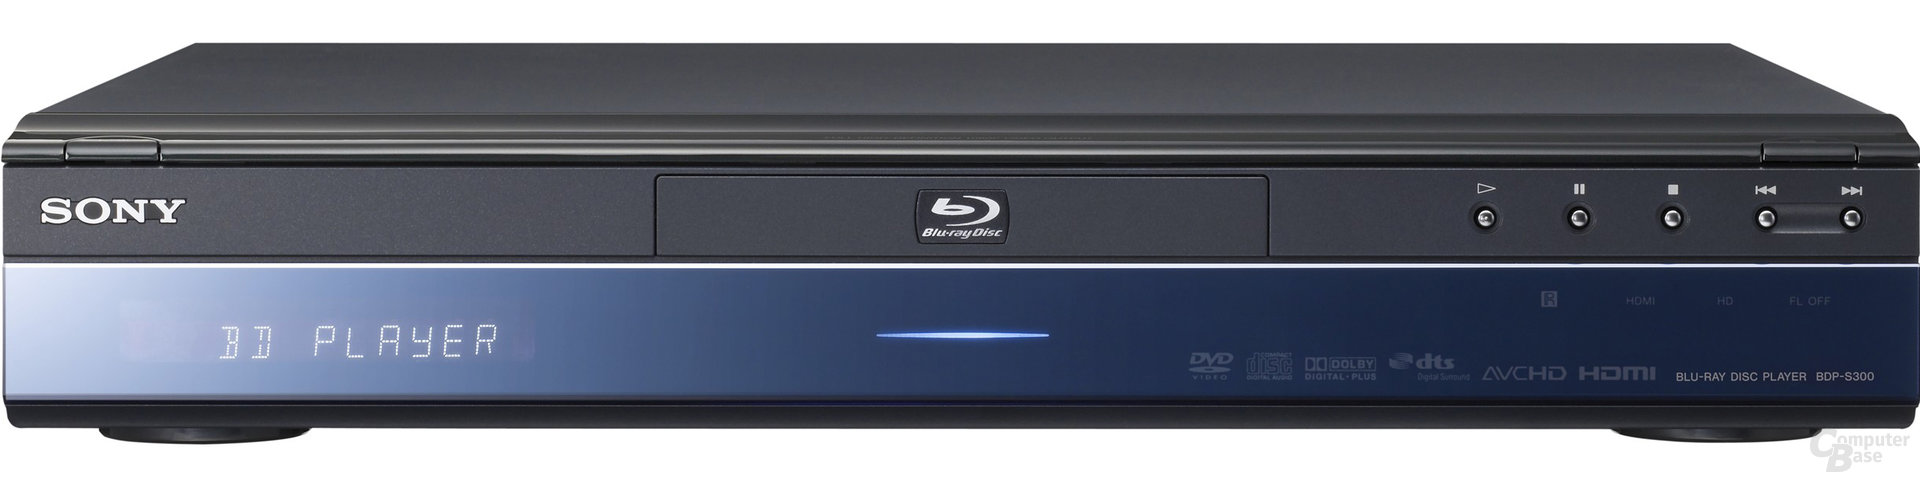 Sony Blu-ray Player BDP-S300